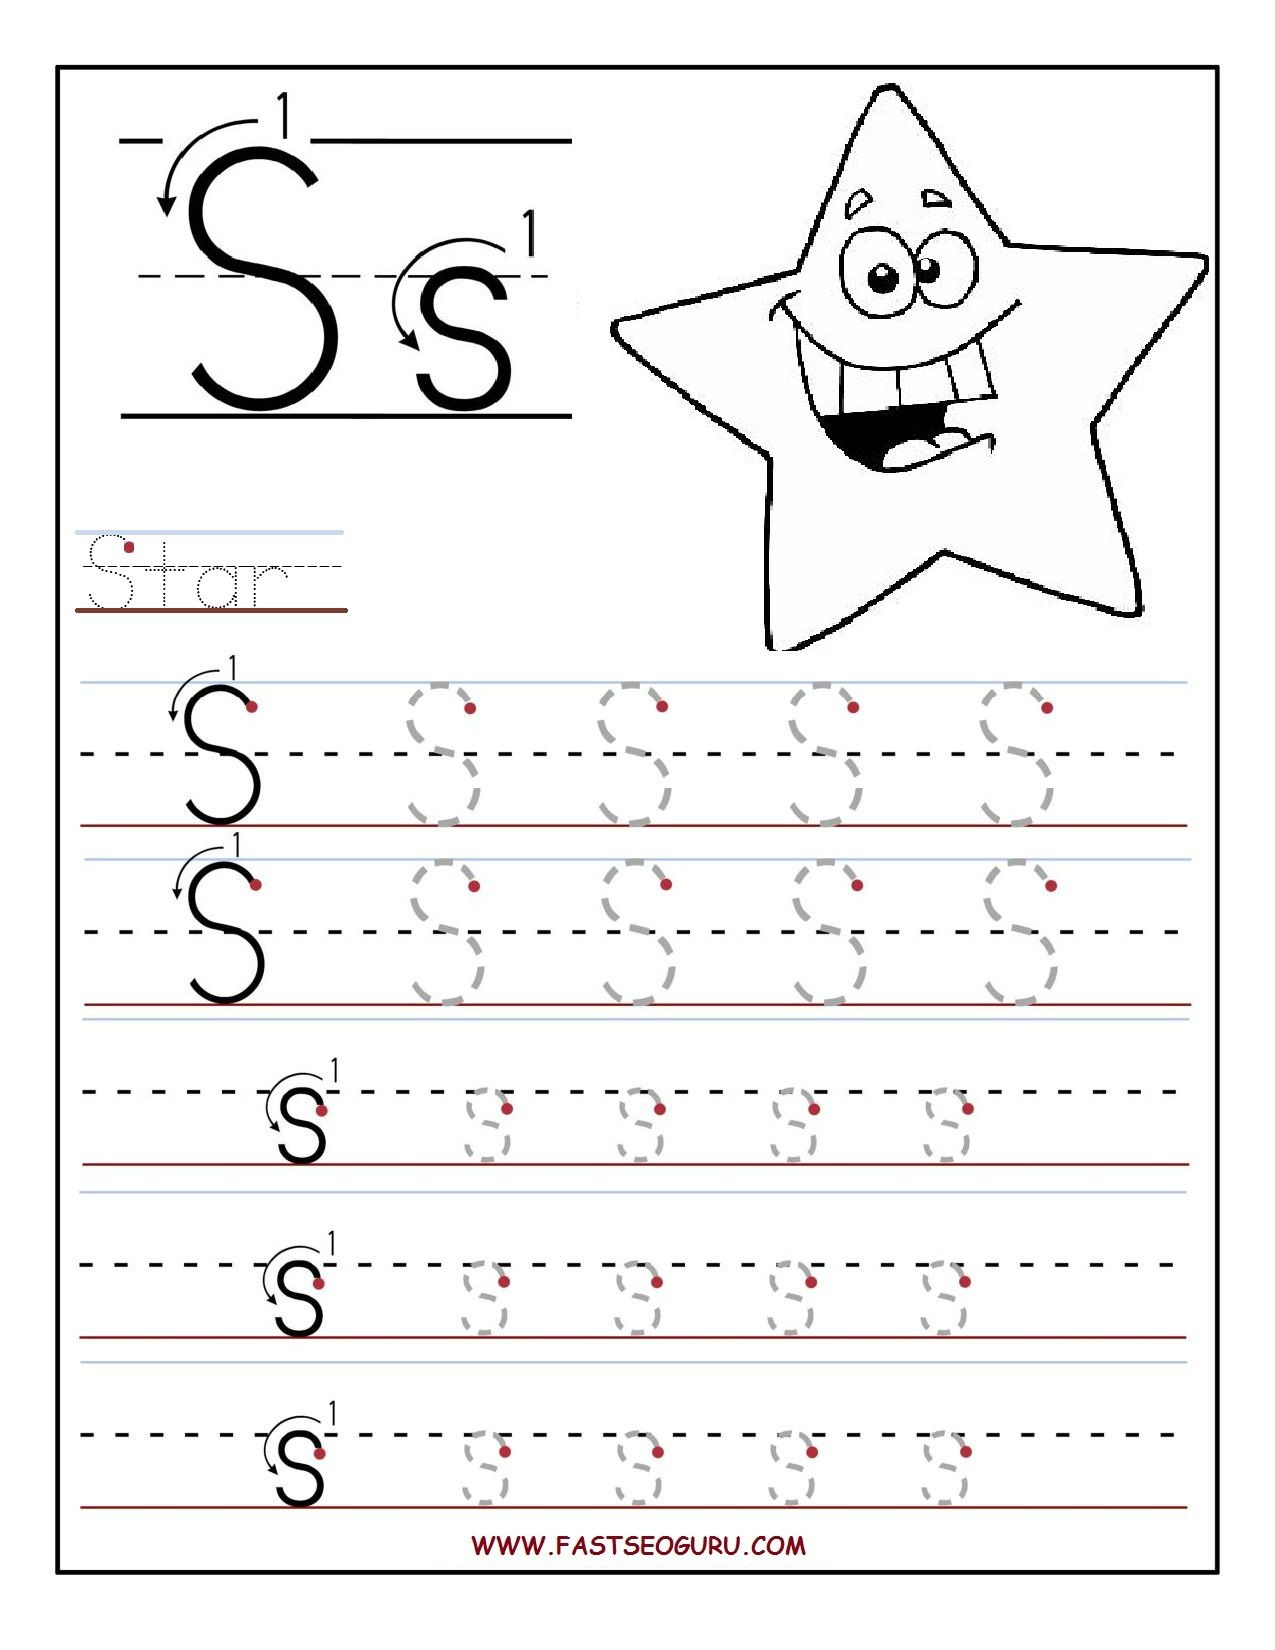 Printable Cursive Alphabet Worksheets Abitlikethis with Tracing Letter S Worksheets For Kindergarten